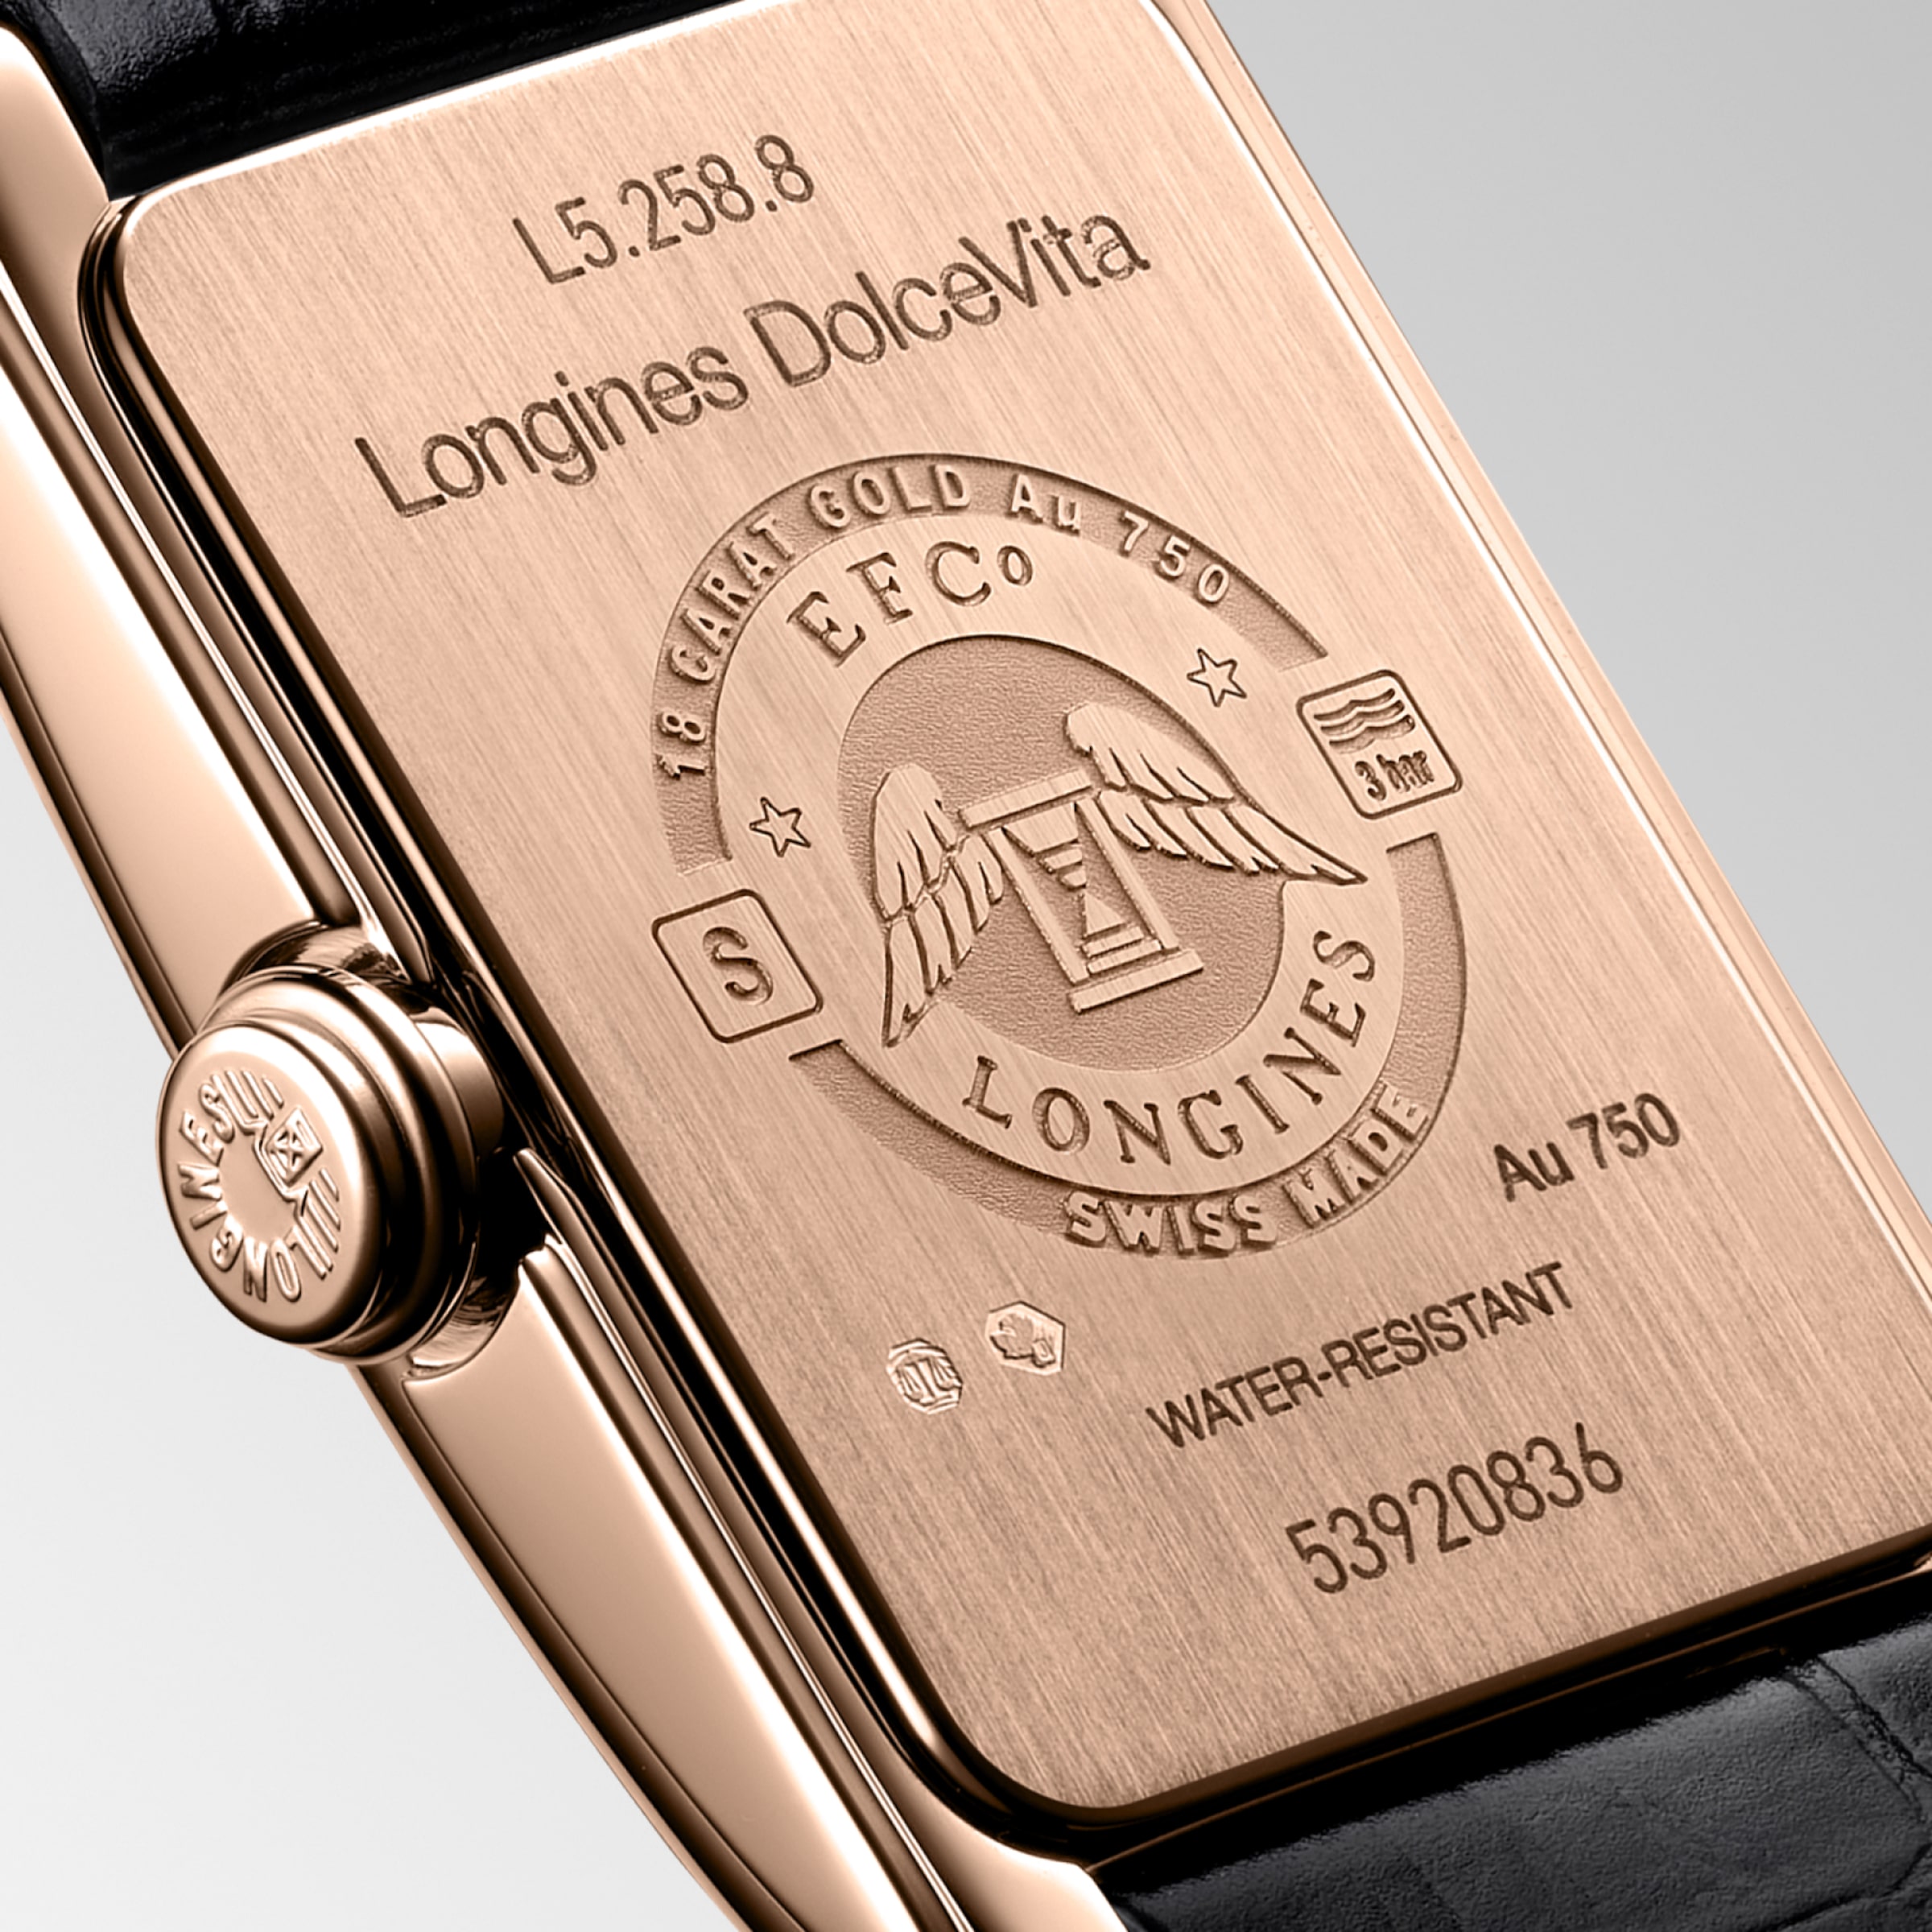 Longines DOLCEVITA Quartz 18 karat pink gold Watch - L5.258.8.71.0